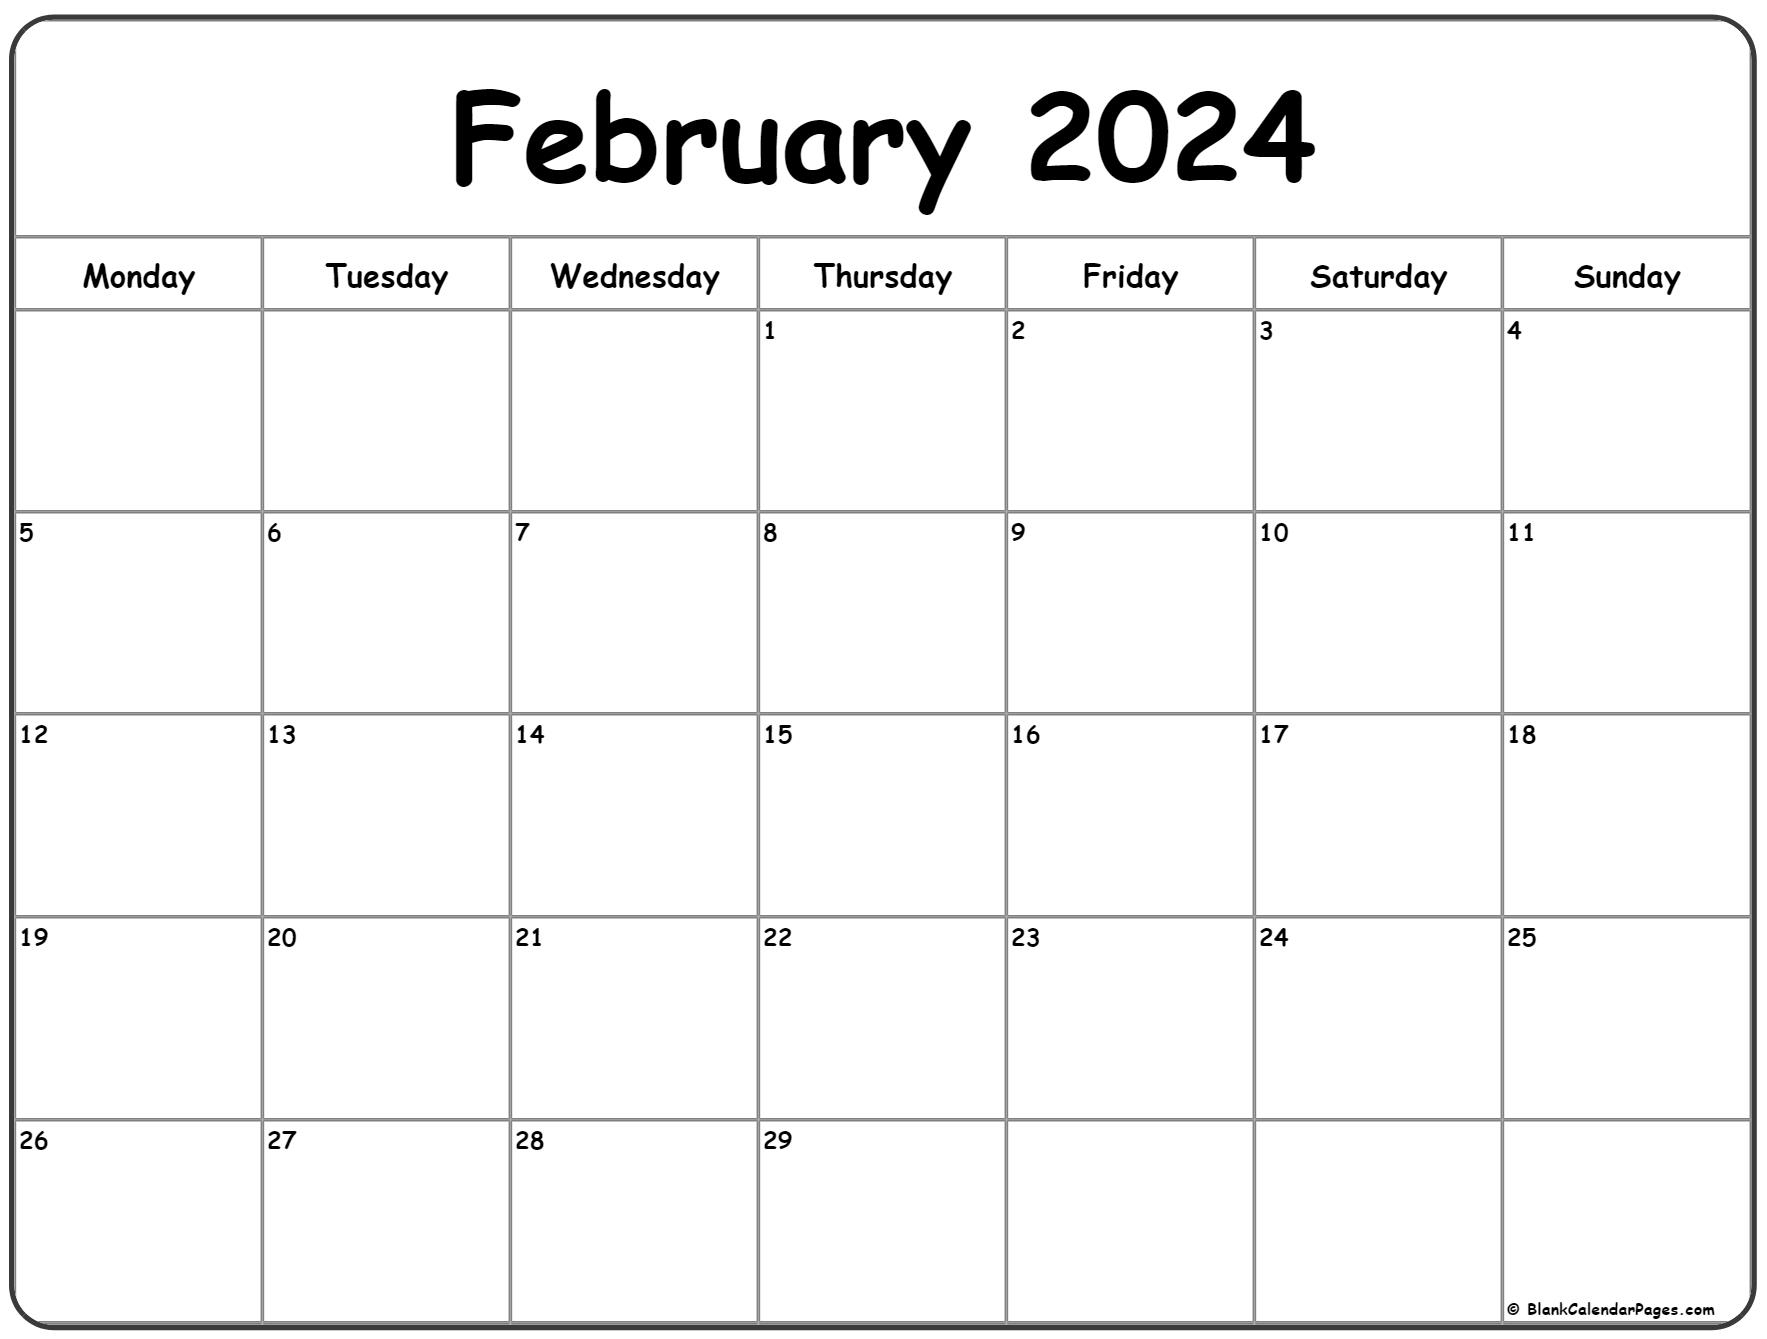 February 2024 Monday Calendar | Monday To Sunday for Blank Printable Calendar February 2024